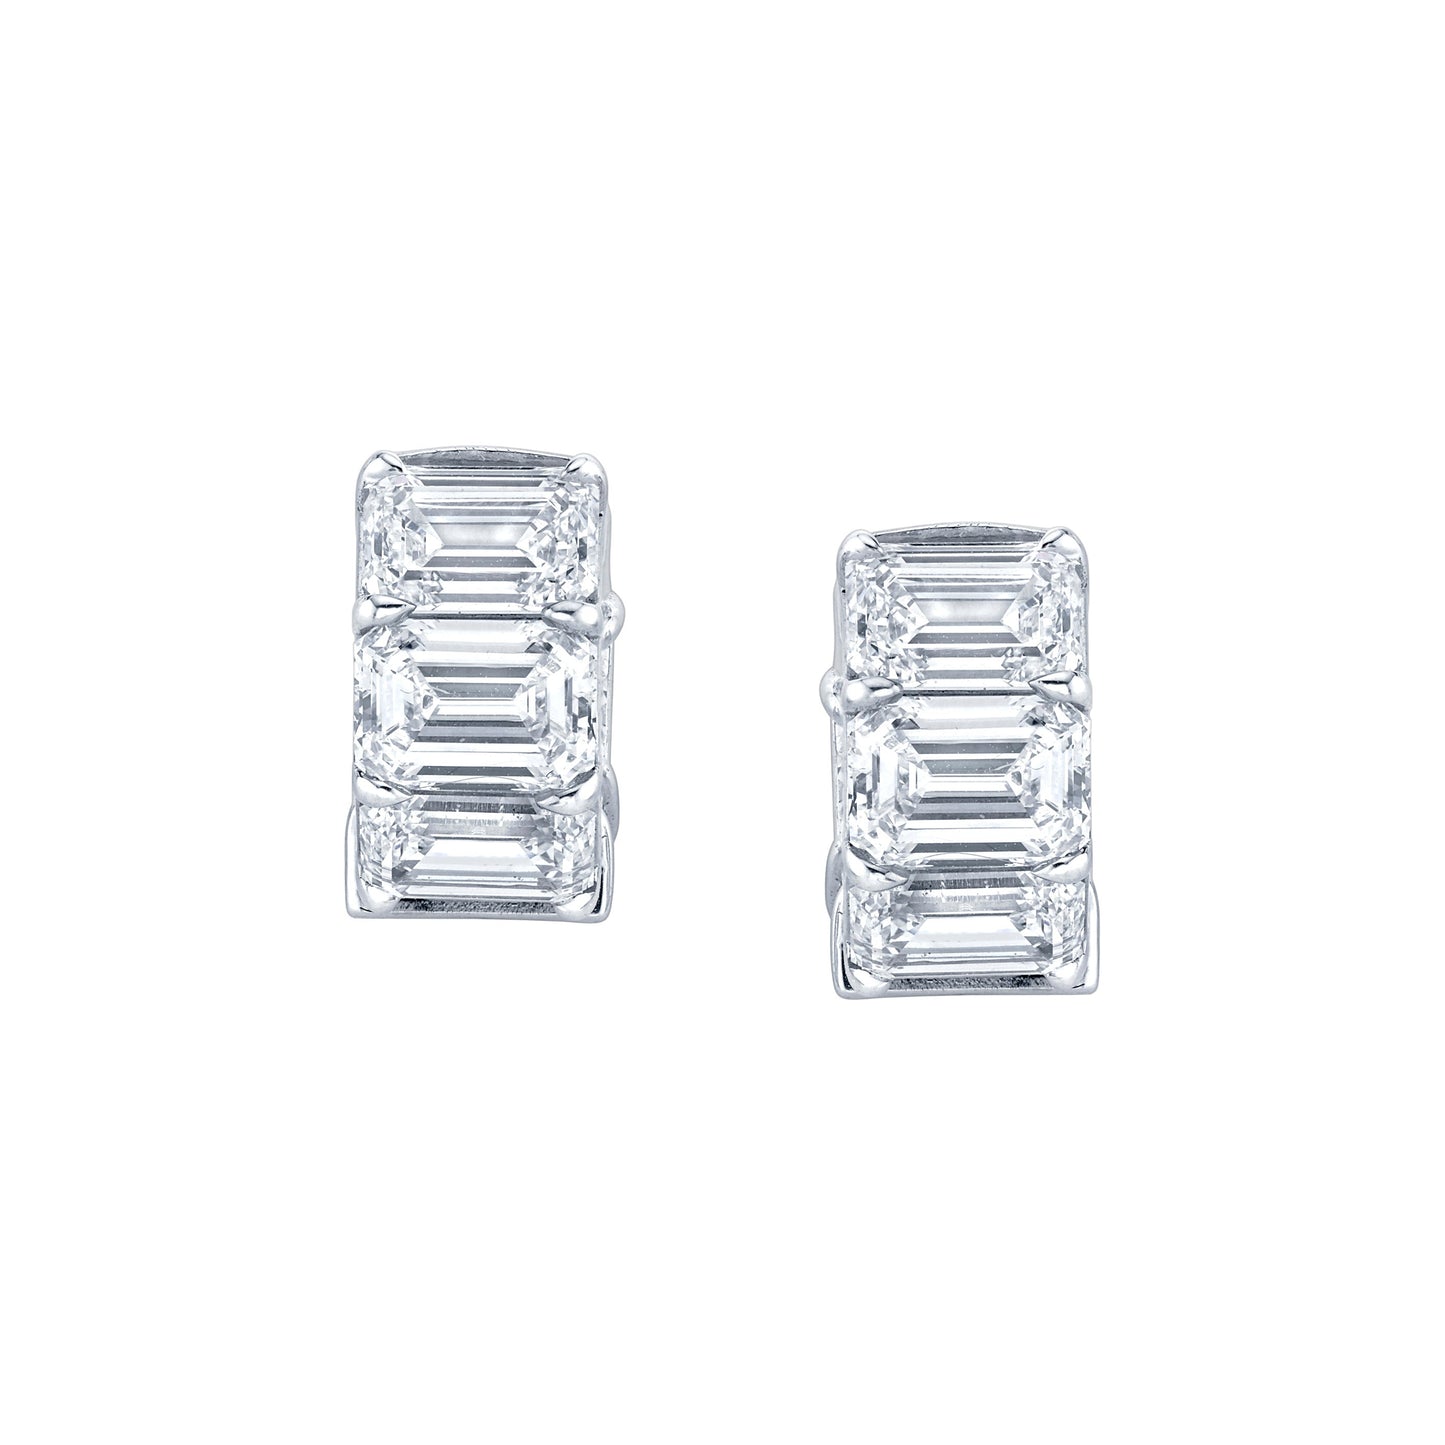 10 Carat Emerald Cut Diamond Huggie Earrings